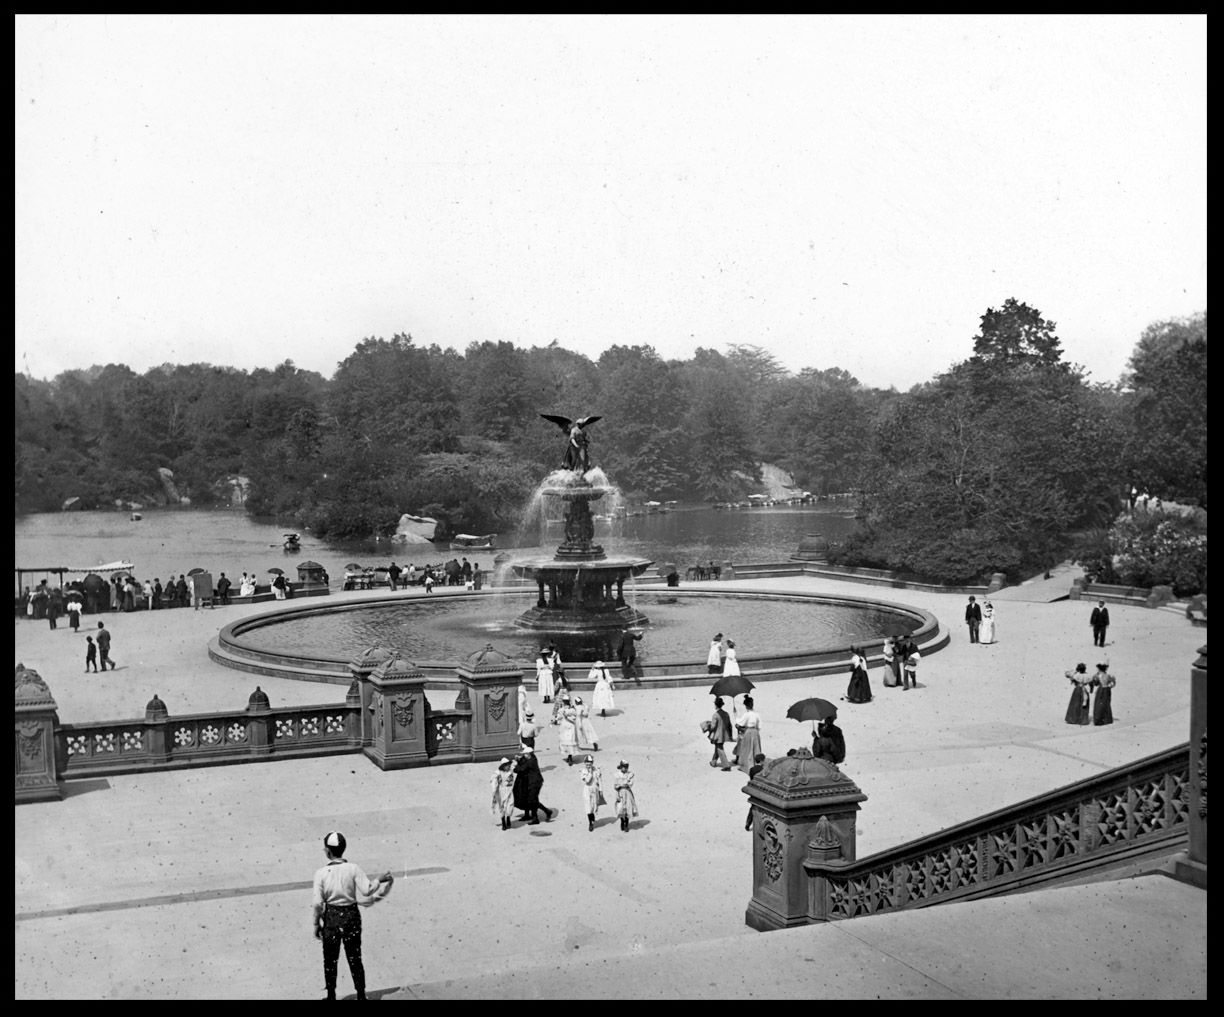 Central Park Bethesda Fountain c.1915 from original 4x5 glass plate negative